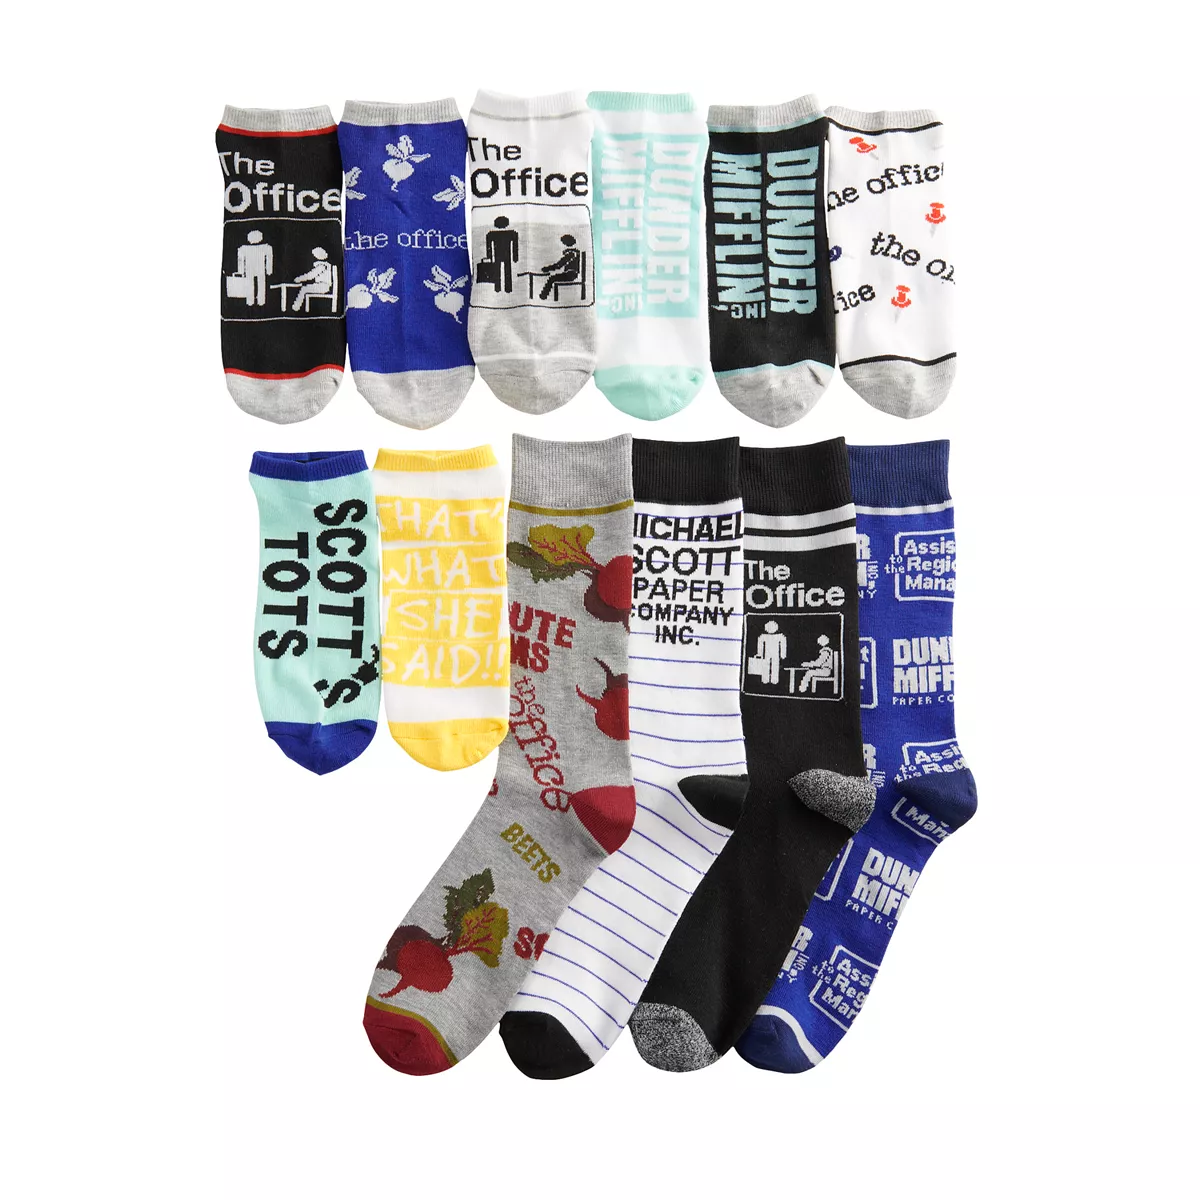 2020 The Office Socks Advent Calendar Available Now! {Men's} hello